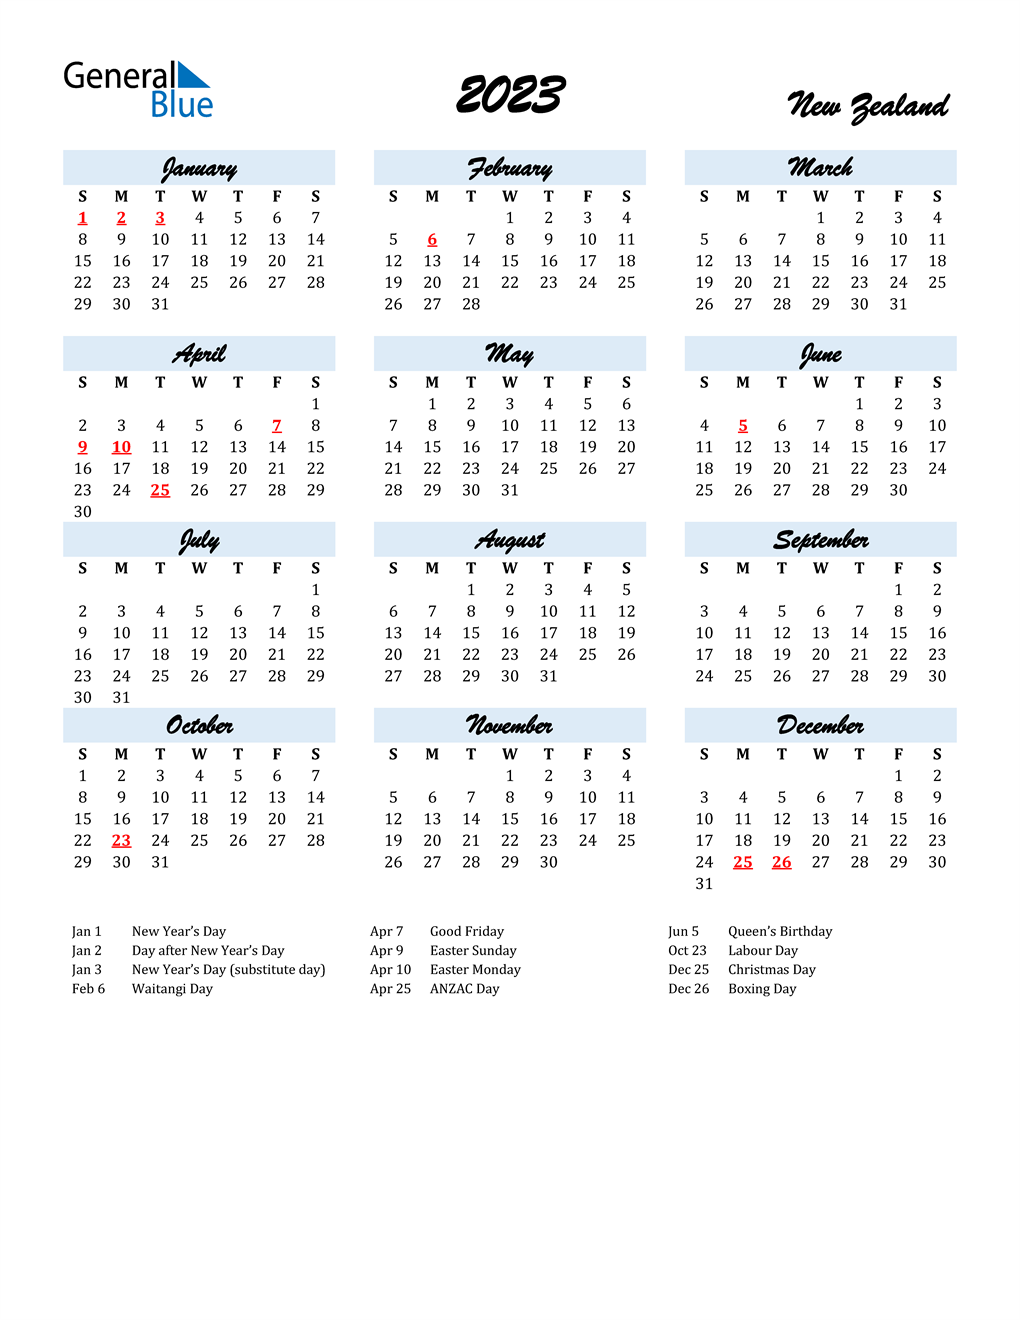 2023 New Zealand Calendar With Holidays 2023 New Zealand Calendar With Holidays Thaddeus Tanner 6151